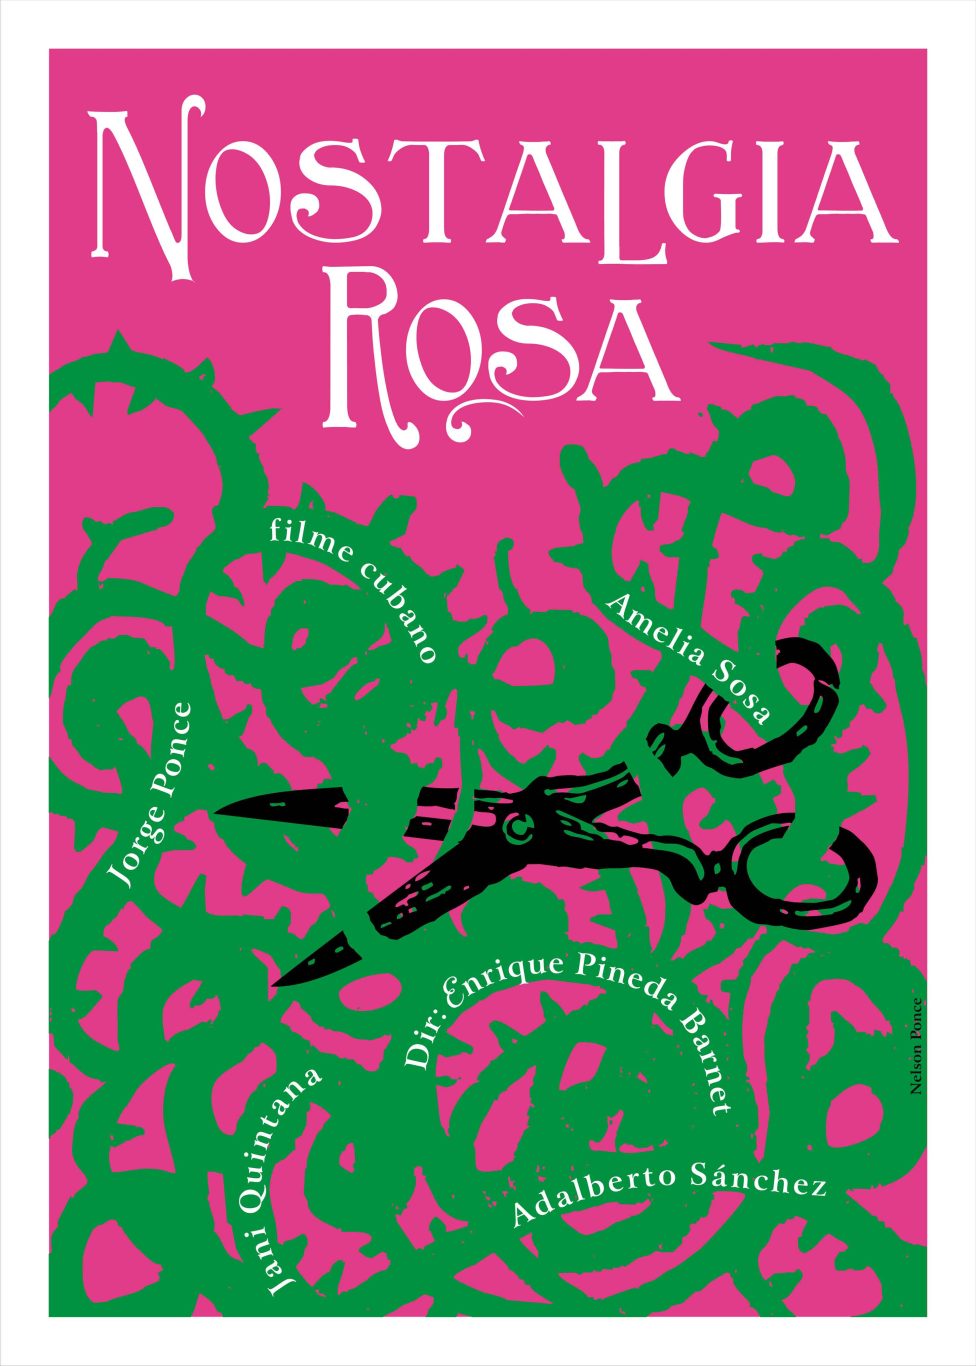 “Nostalgia rosa”, 2006. Diseño de Nelson Ponce. Colección “Ghost Posters”.
